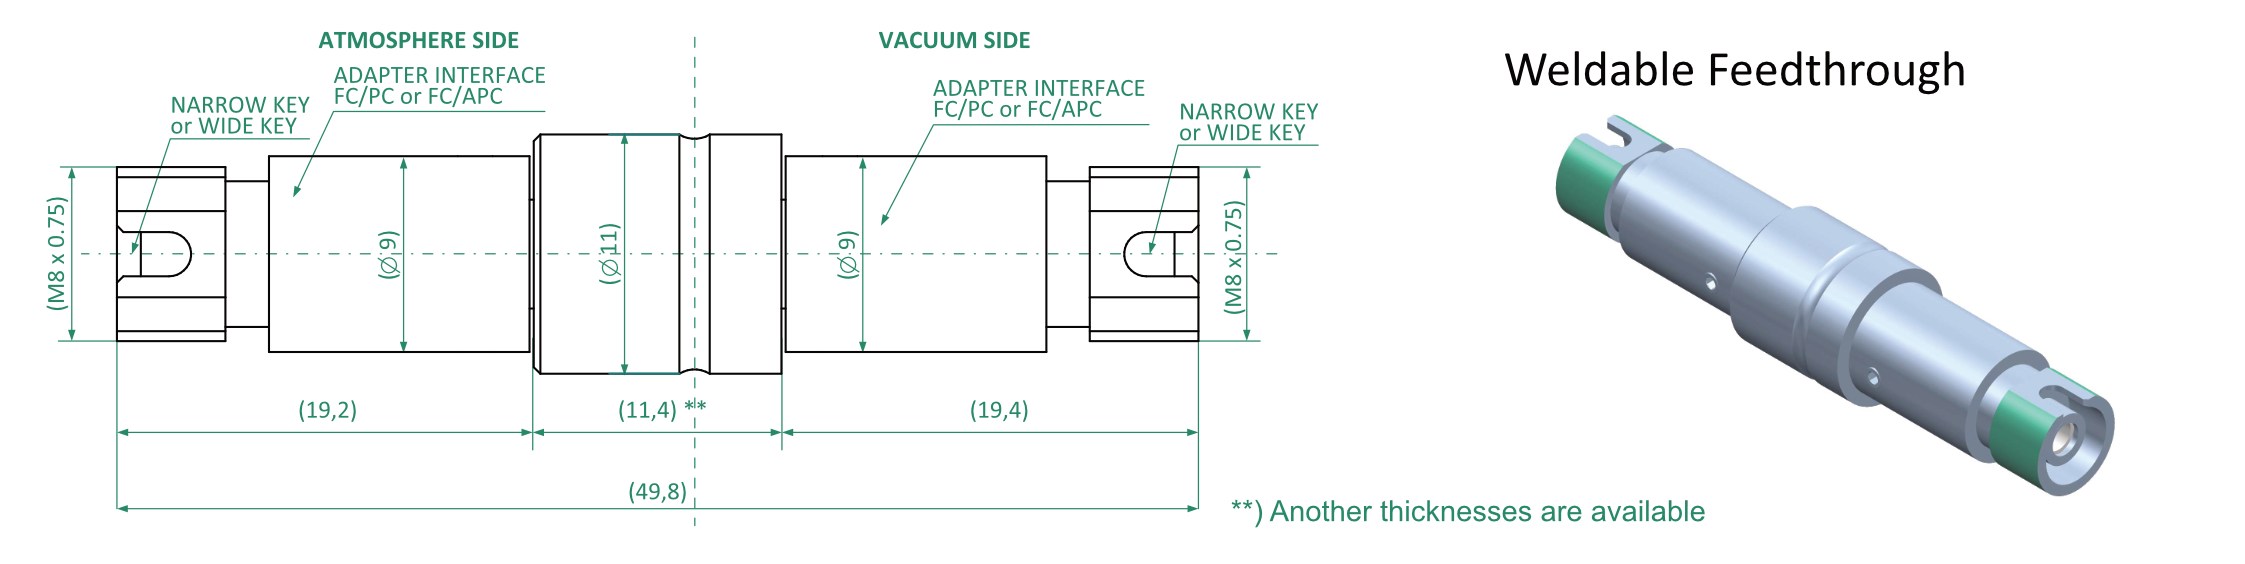 Vacuum Adapter Fiber Optic Feedthrough Without Flange